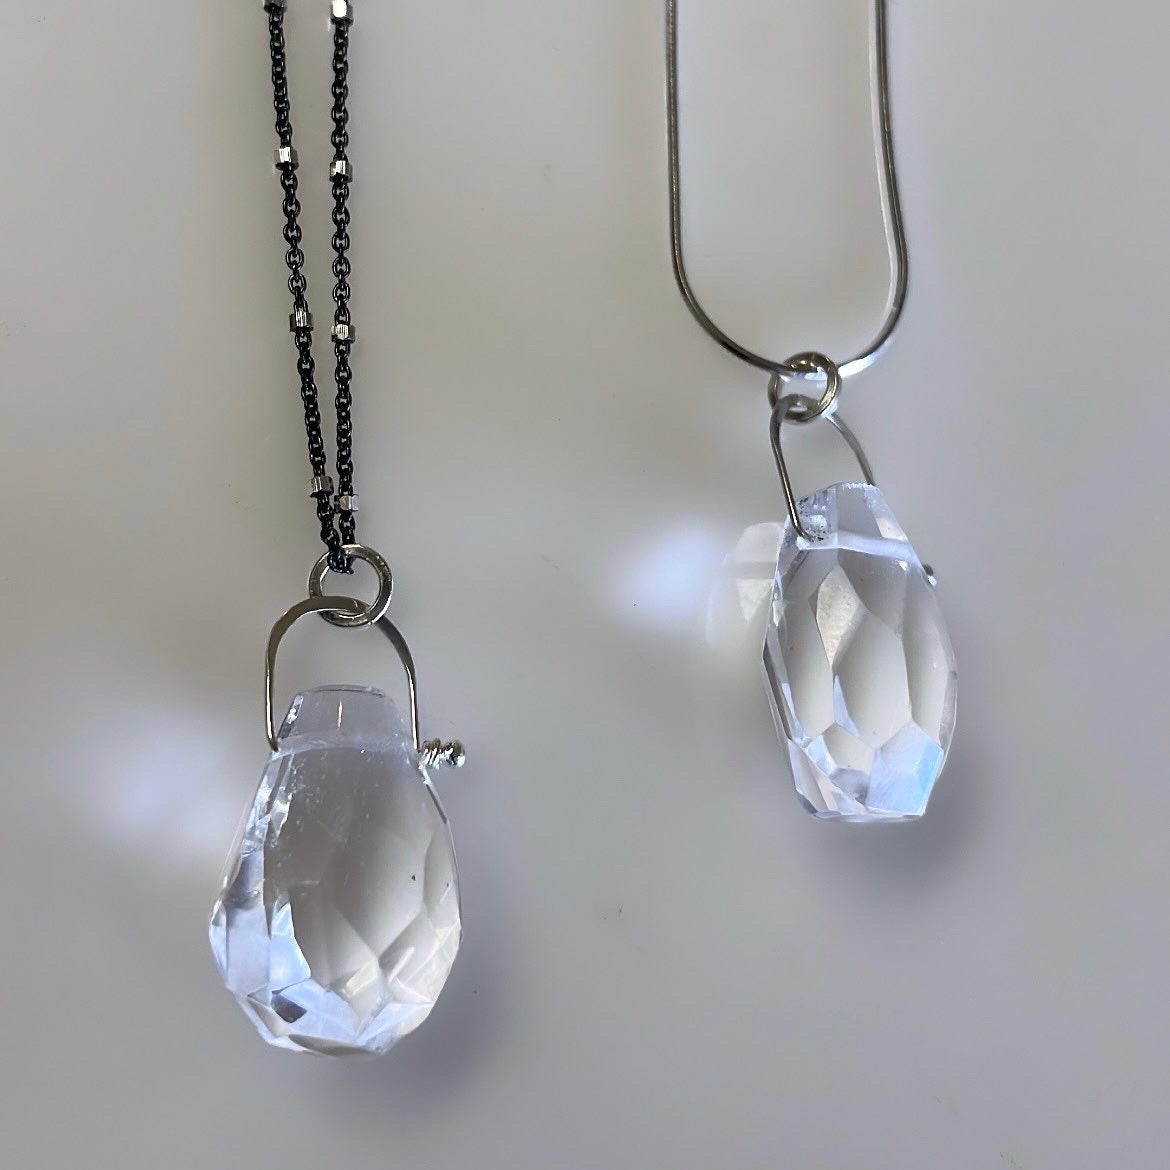 Stirrup quartz crystal necklace-serena kojimoto studio